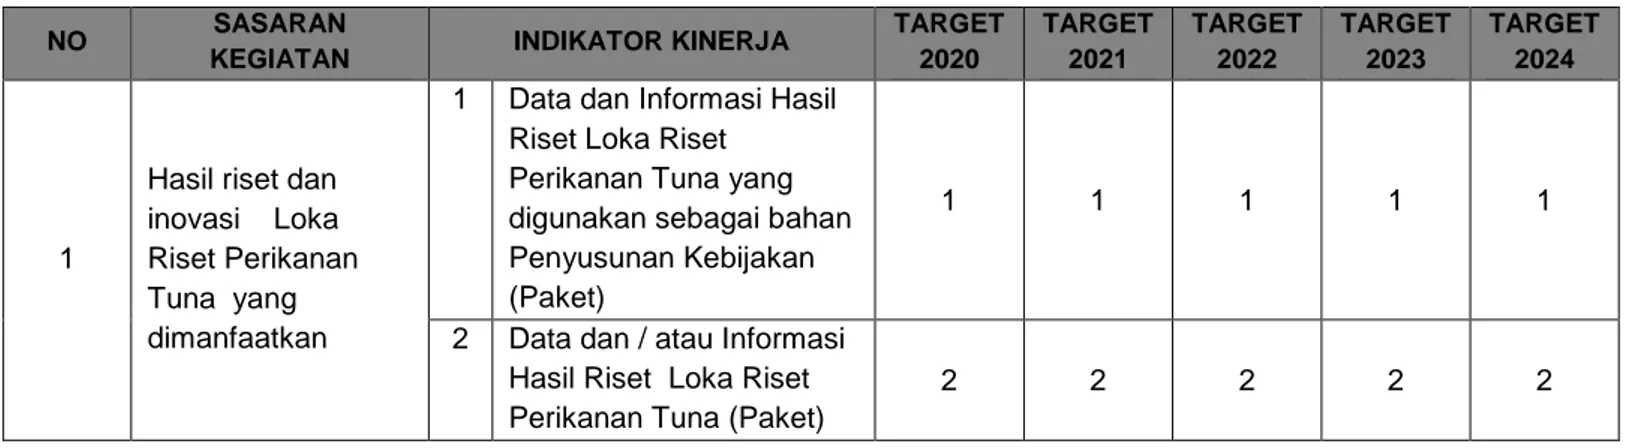 Tabel 2. Rencana Strategis LRPT 2020-2024 